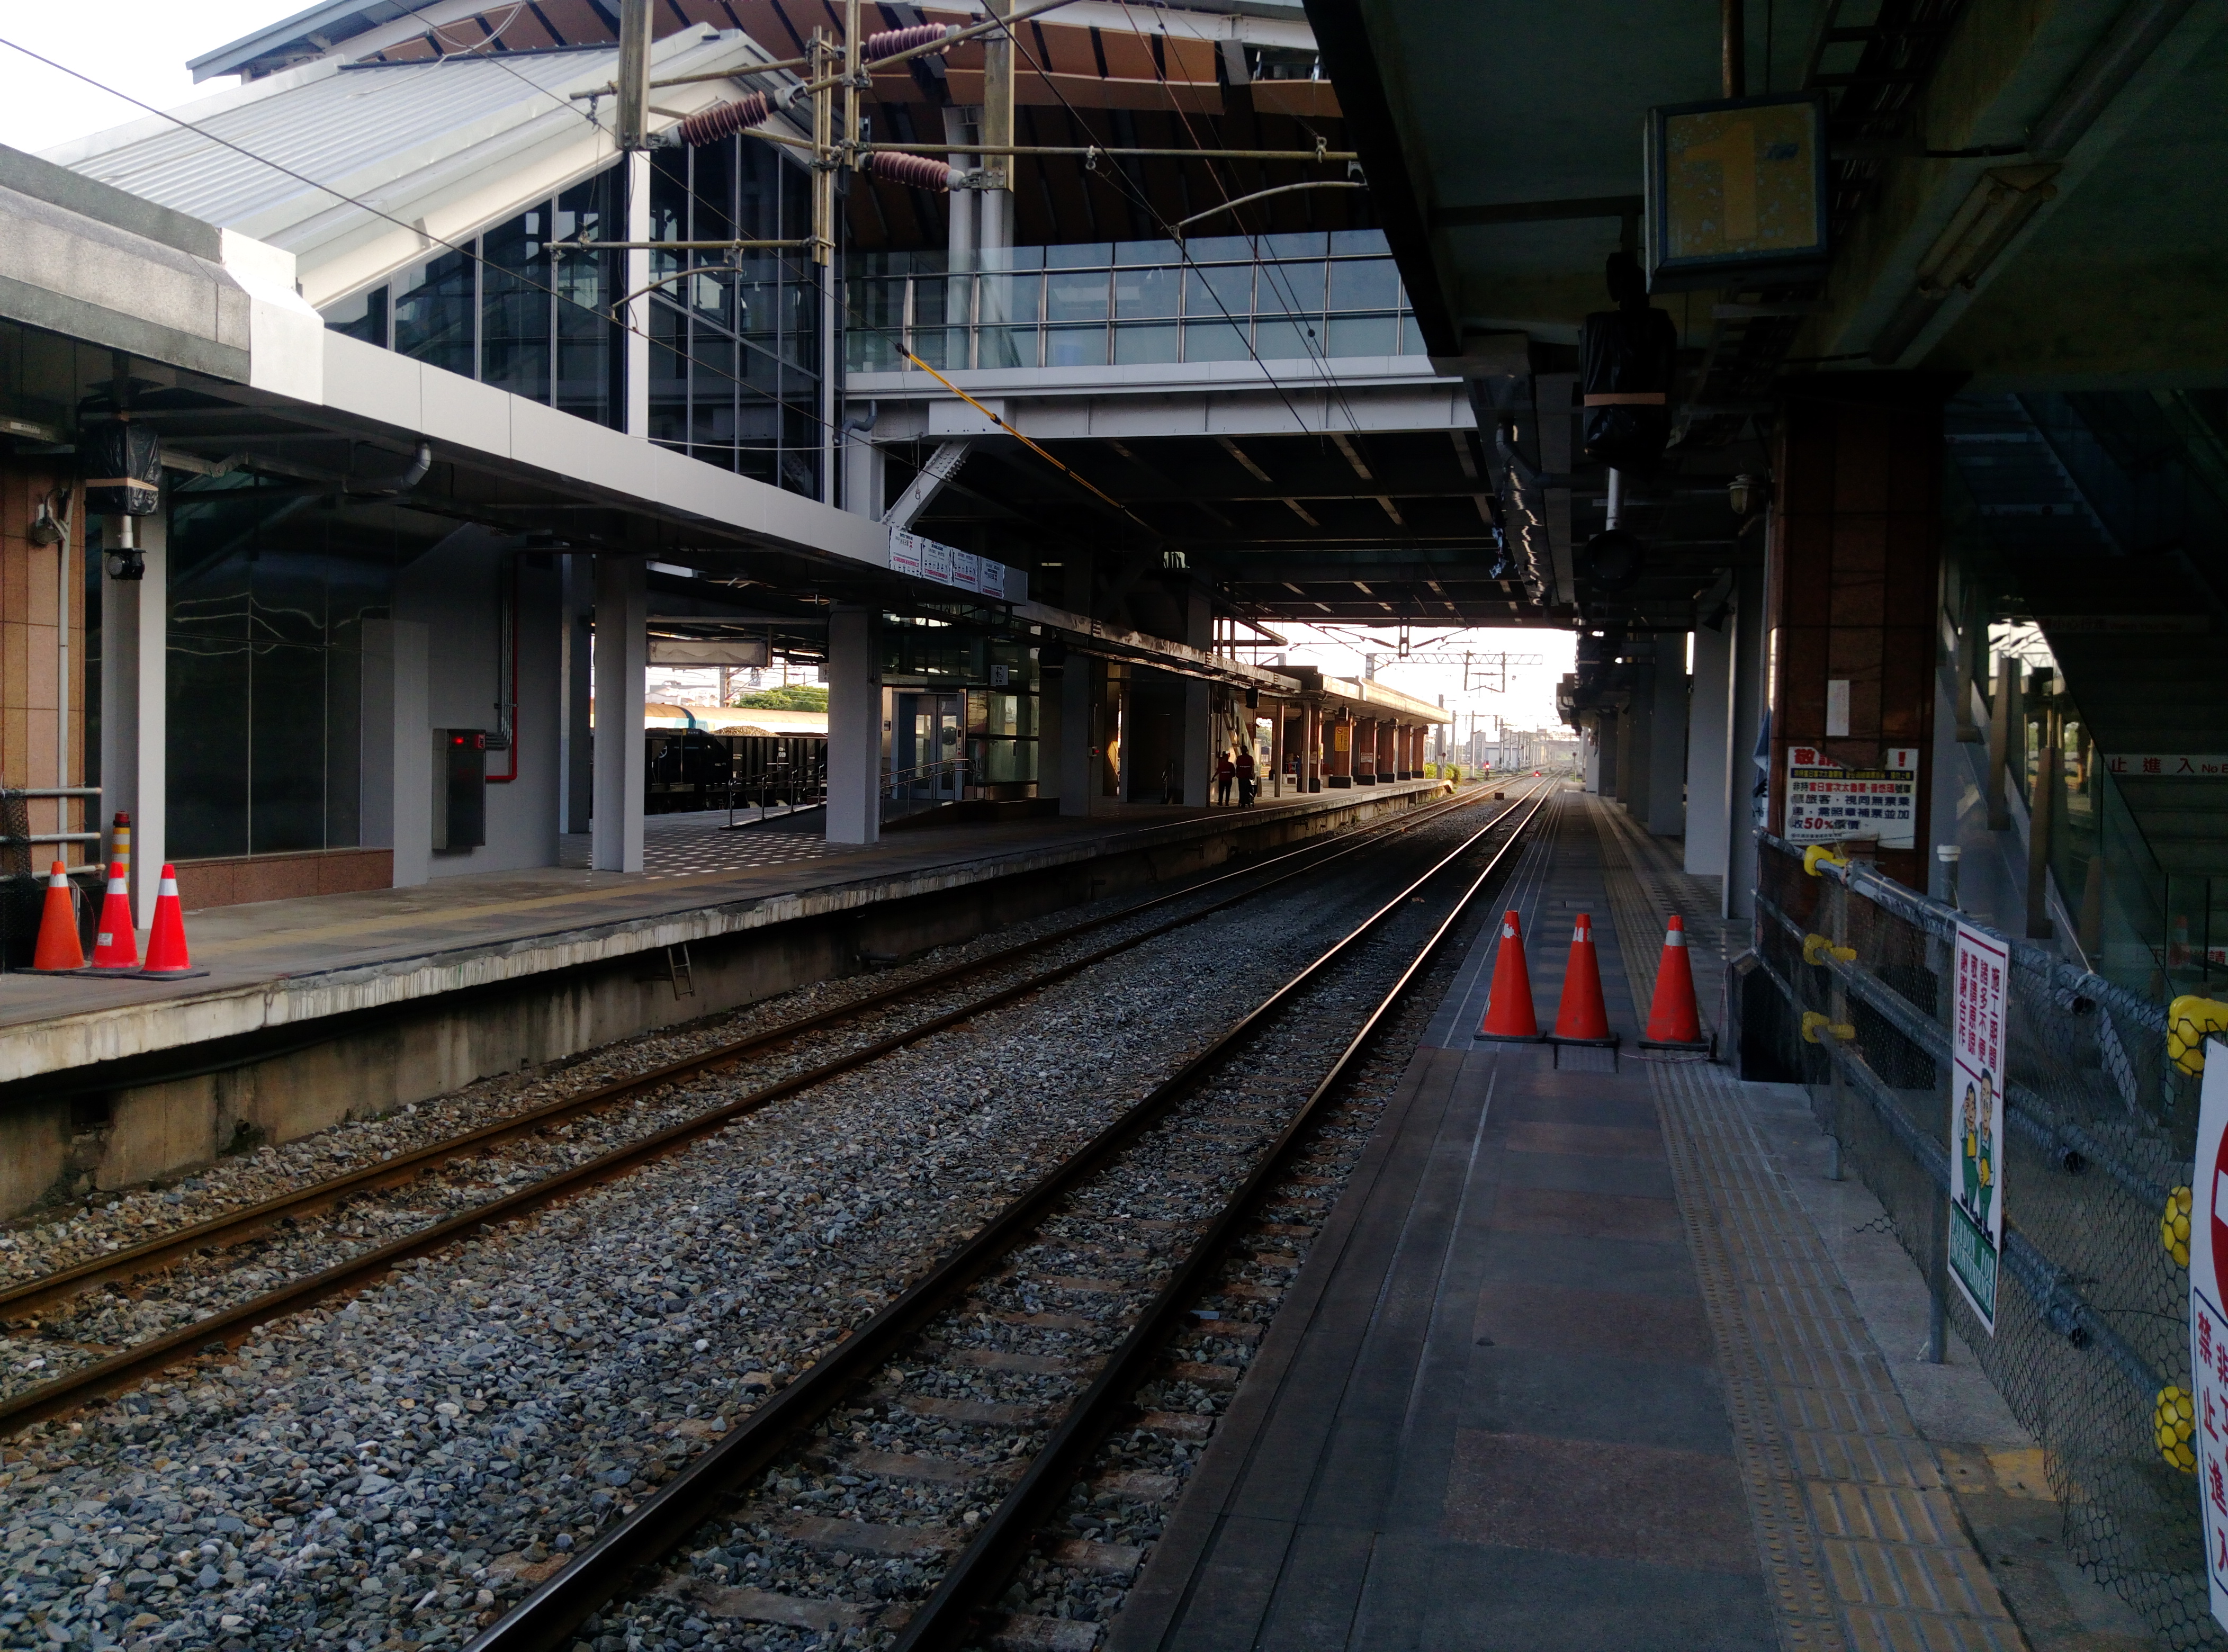 Station three